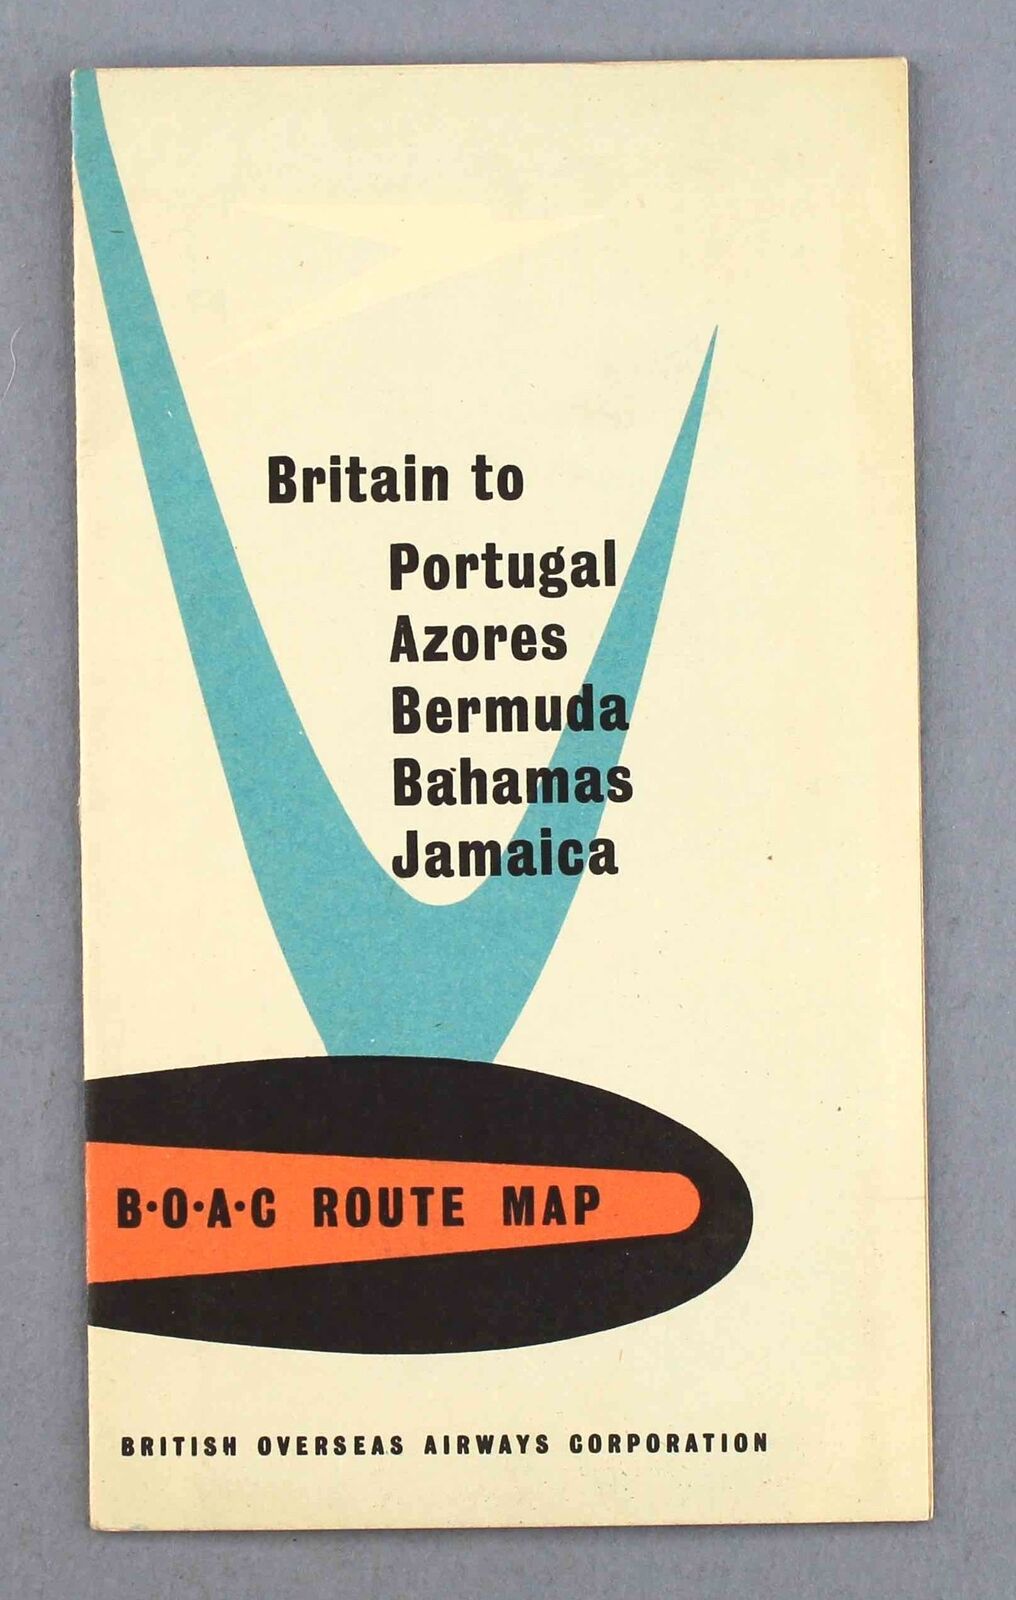 BOAC VINTAGE AIRLINE ROUTE MAP BRITAIN PORTUGAL AZORES BERMUDA BAHAMAS JAMAICA